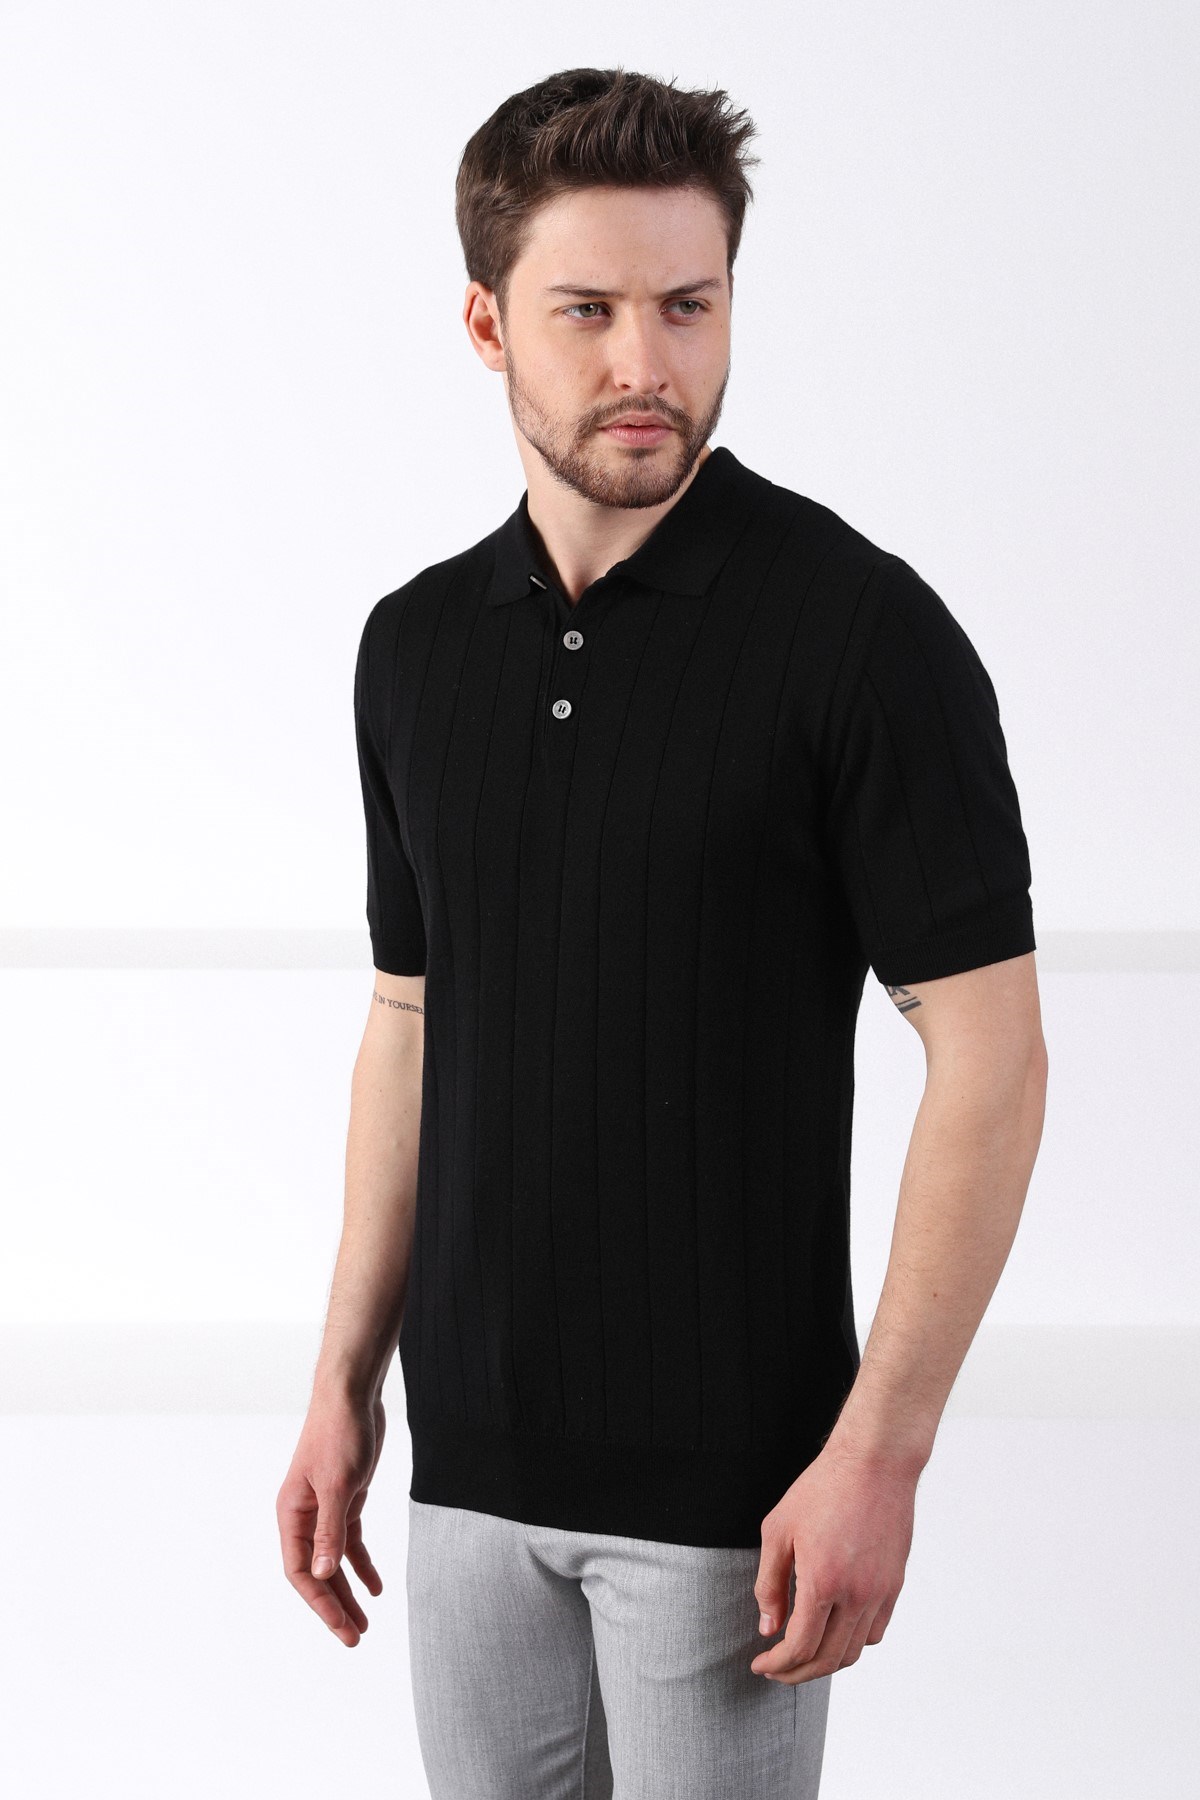 Ferraro Siyah Polo Yaka Fitilli Erkek Pamuk Triko T-Shirt | Erkek Giyim |  modaferraro.com.tr